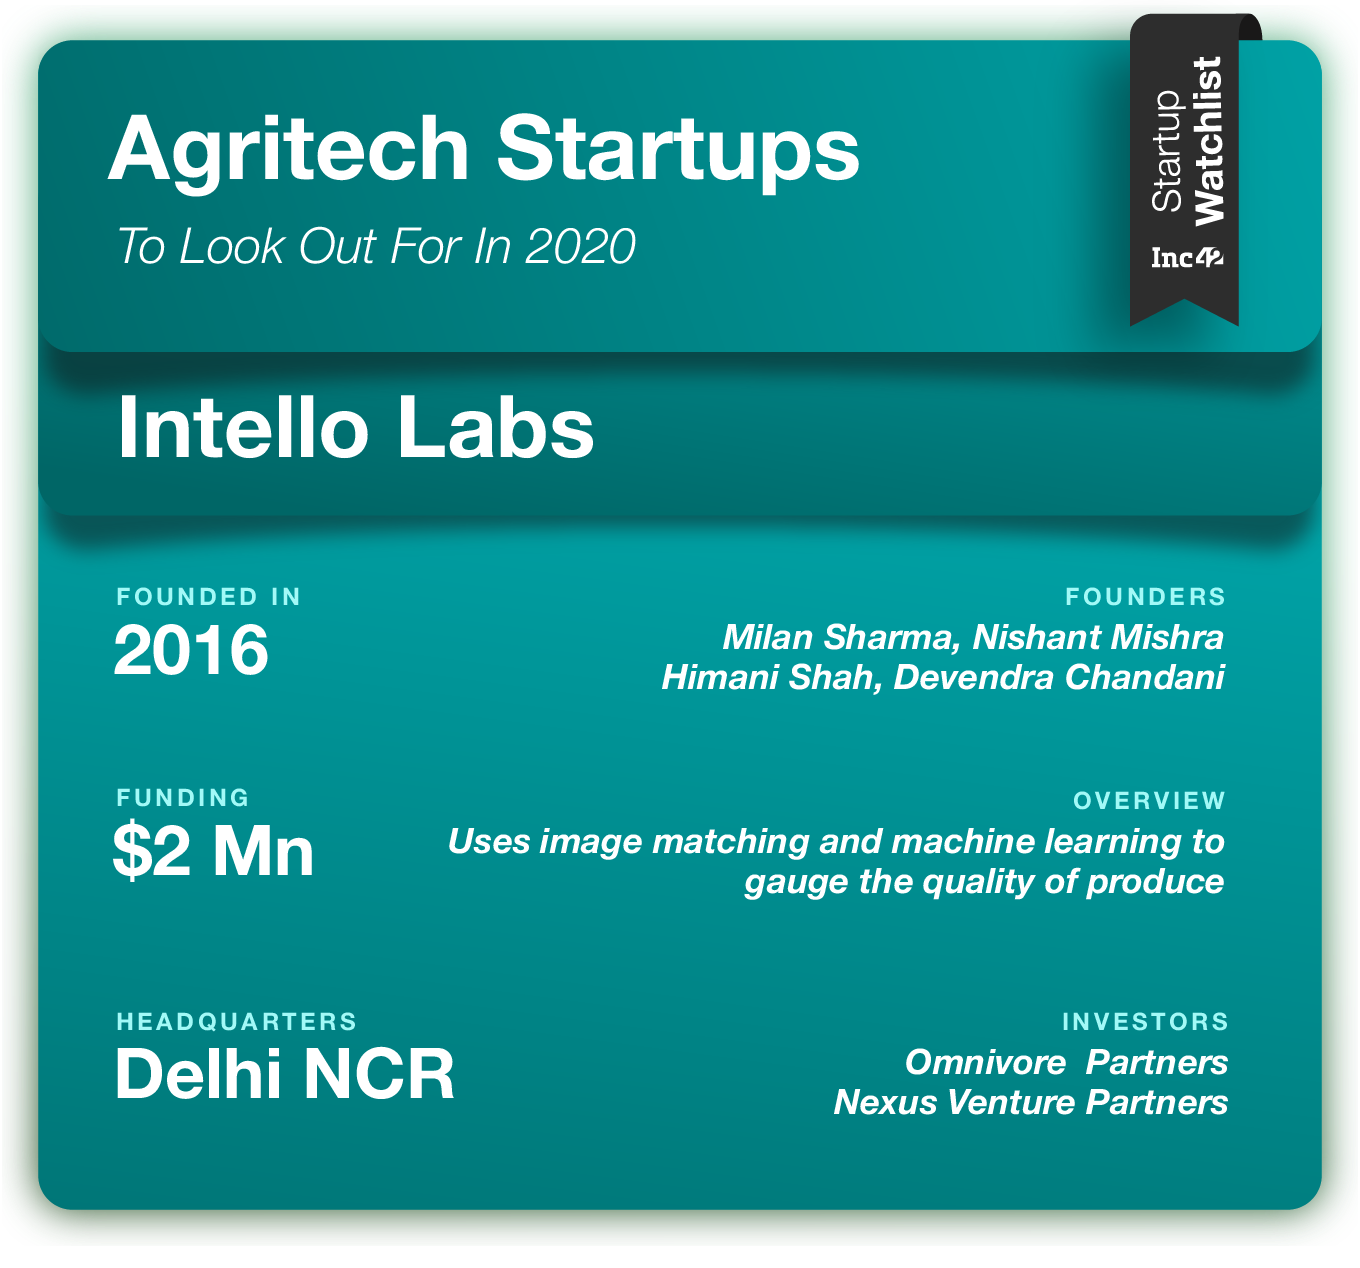 Intello Labs Agritech Startups